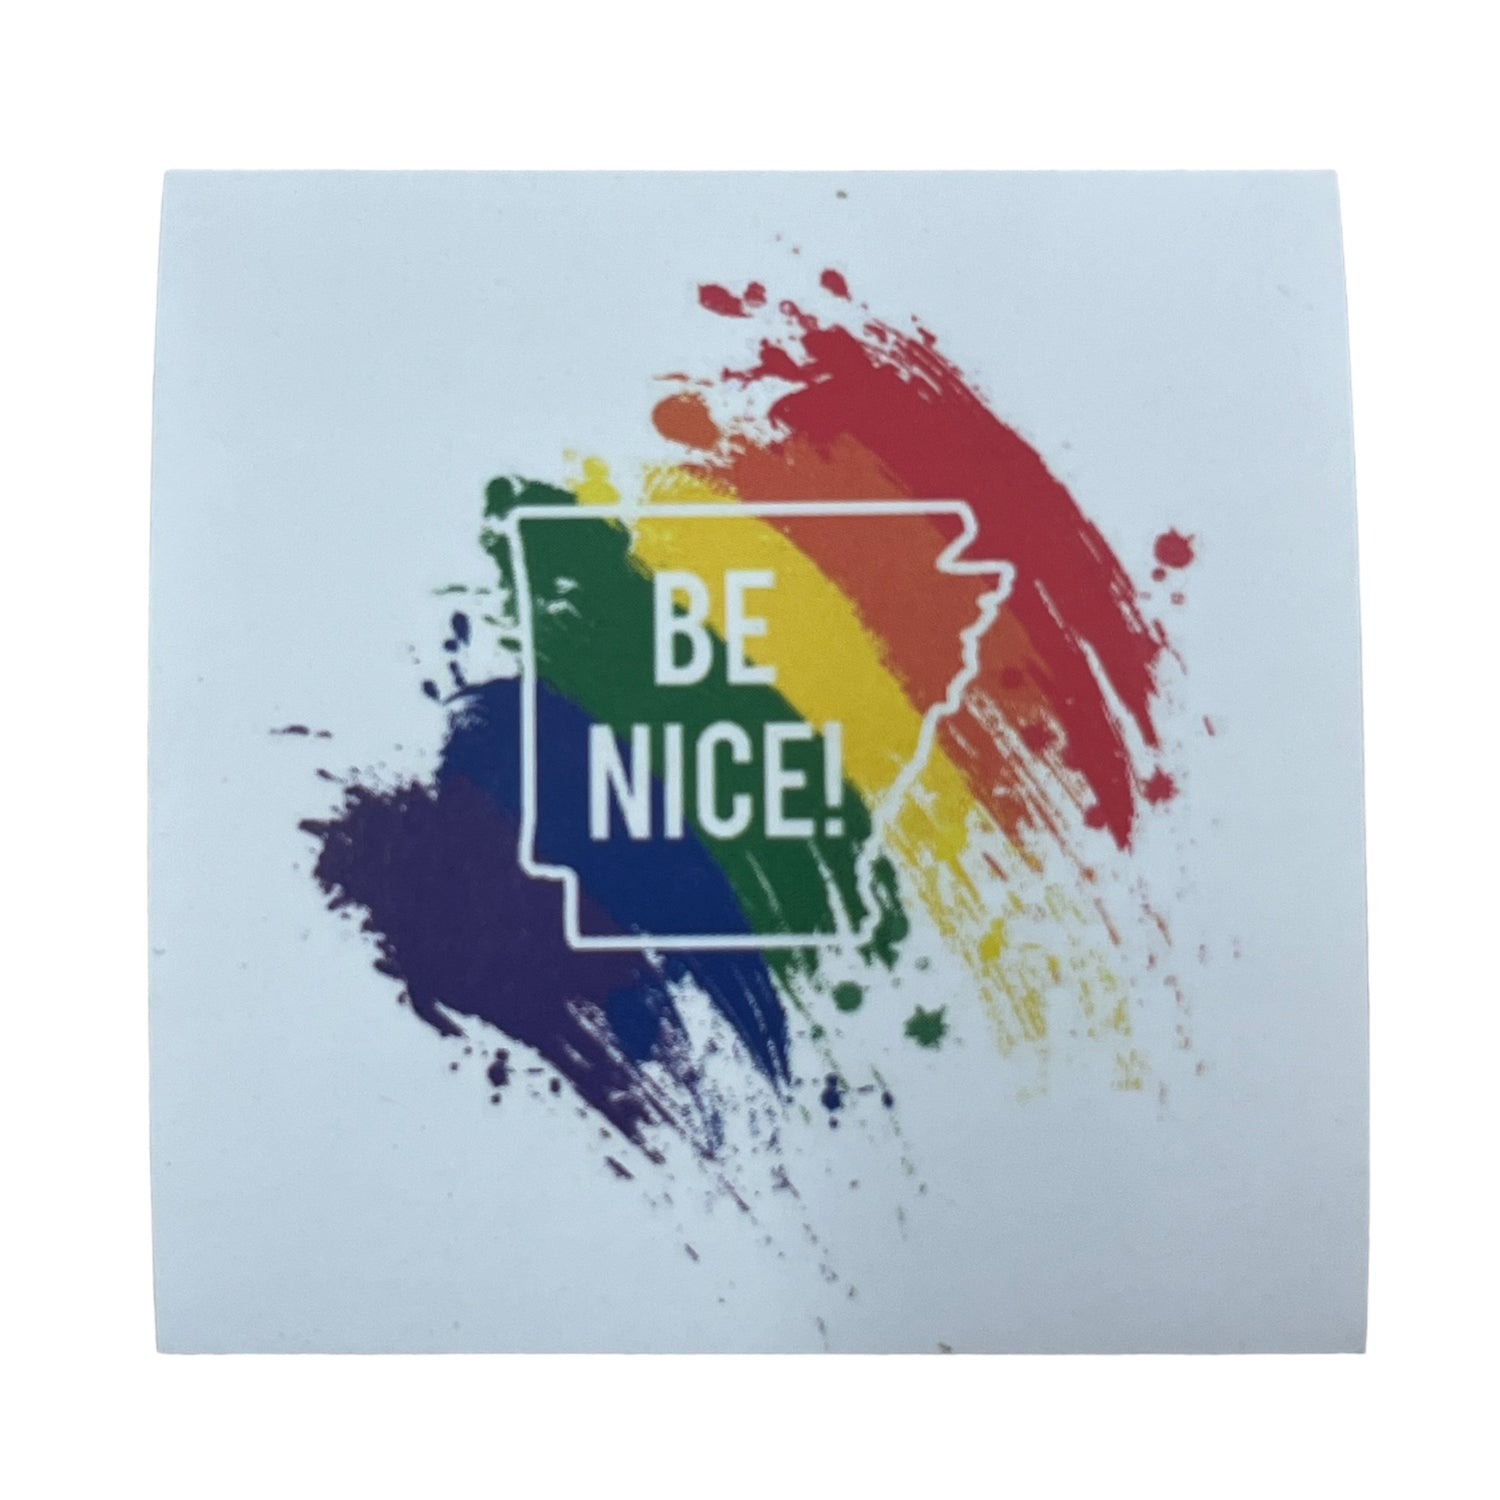 Be Nice! Sticker